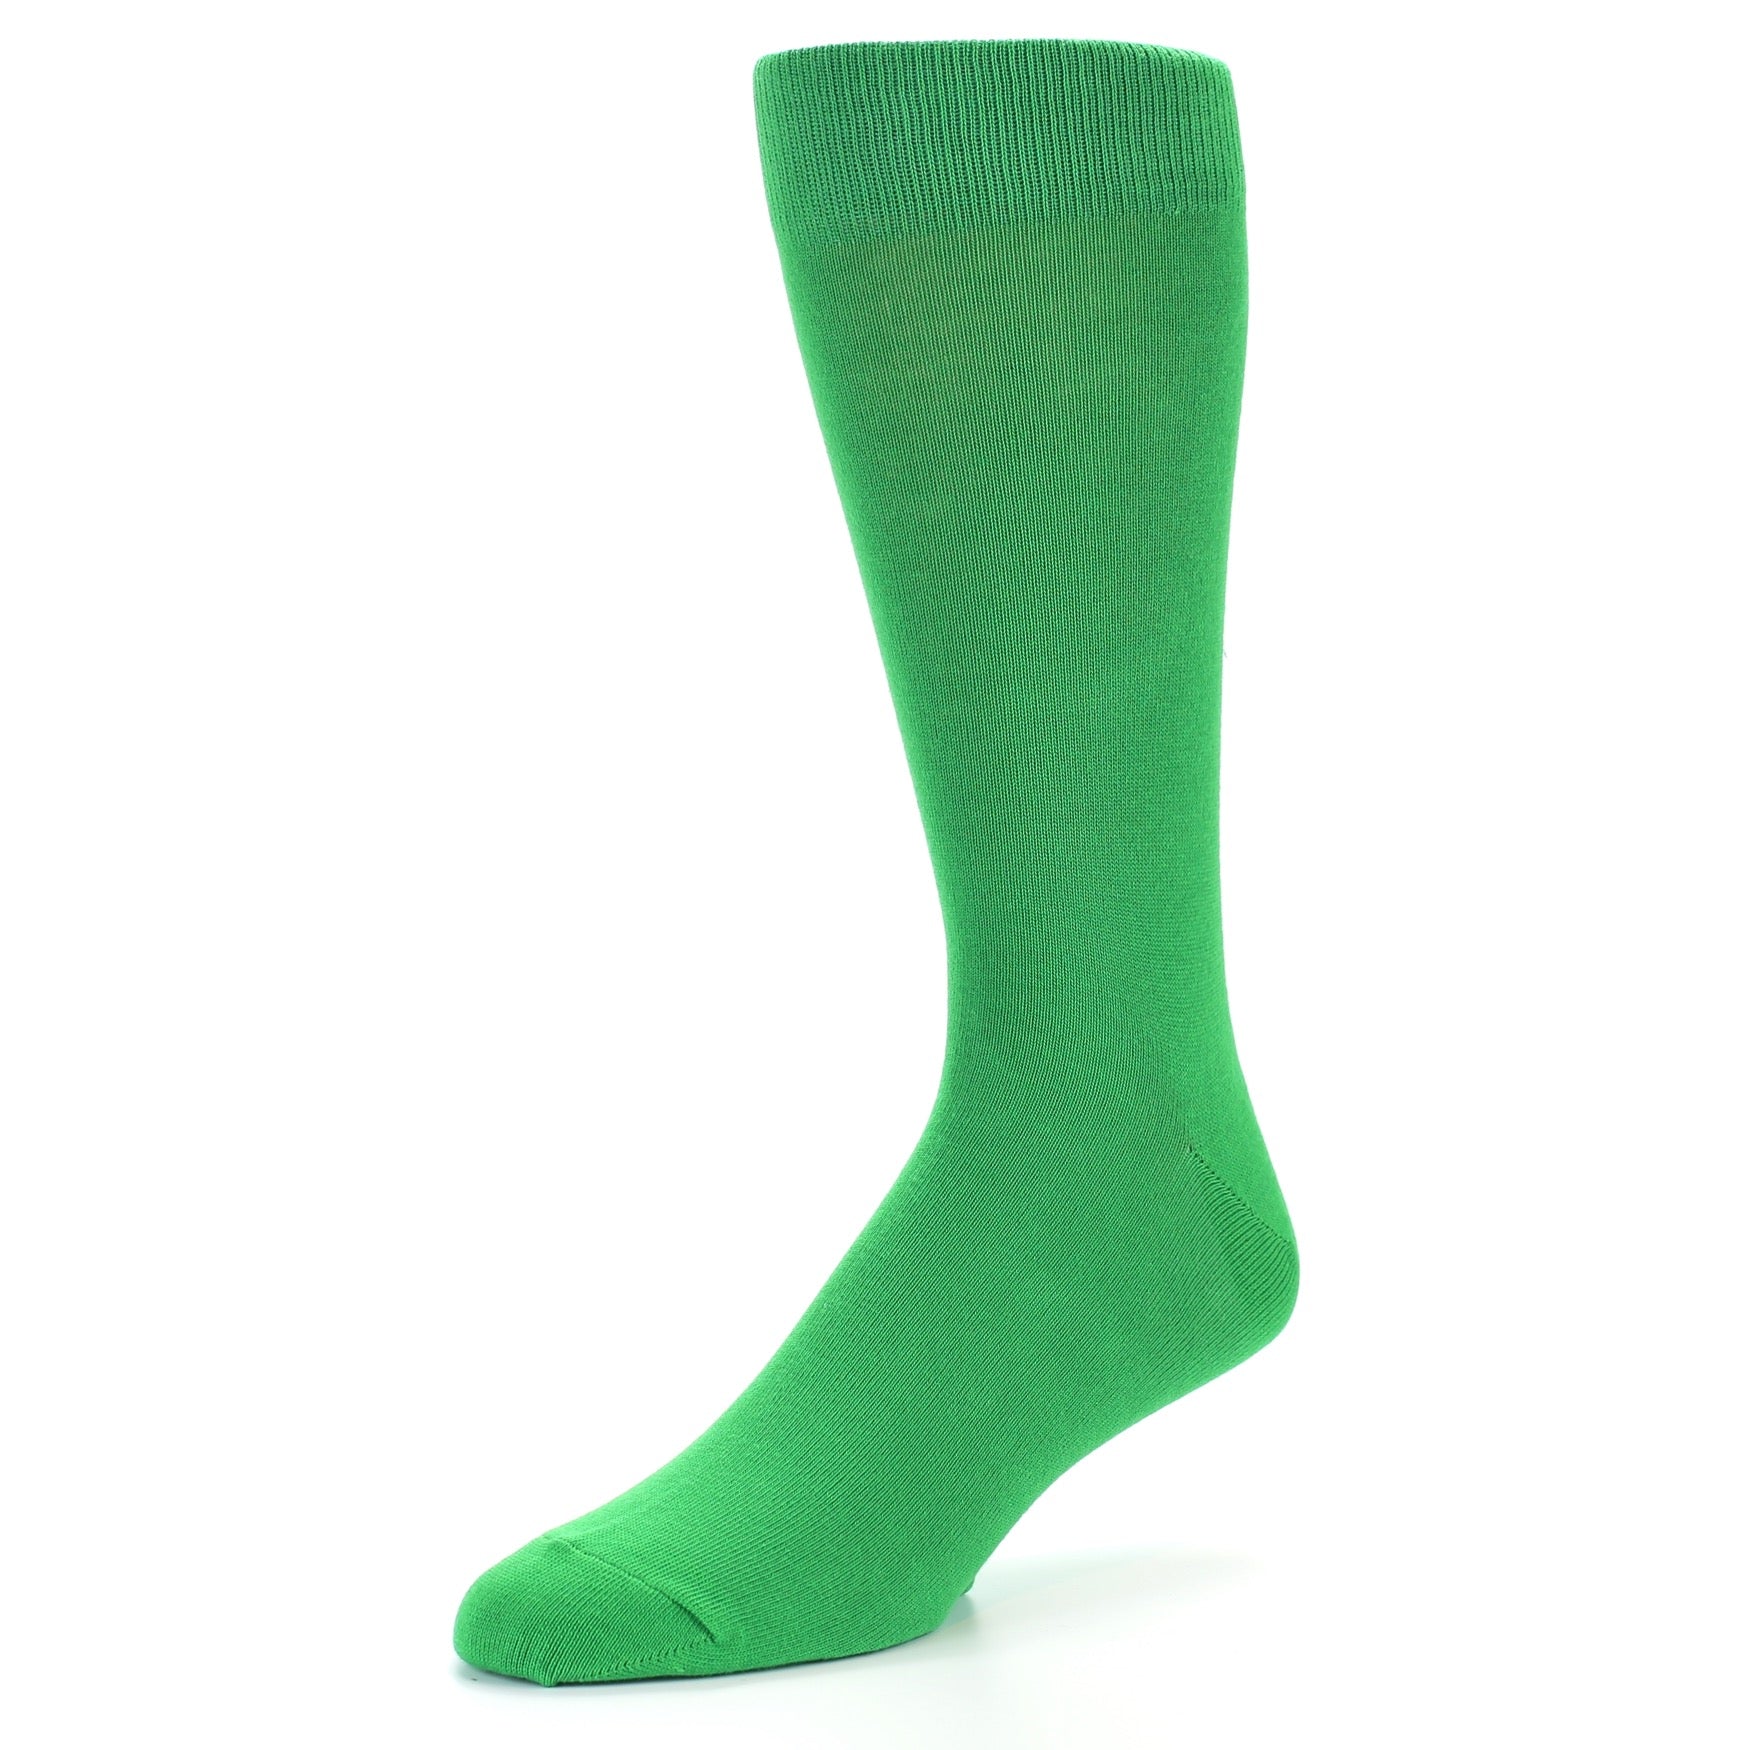 Kelly Green Solid Color Men's Dress Socks